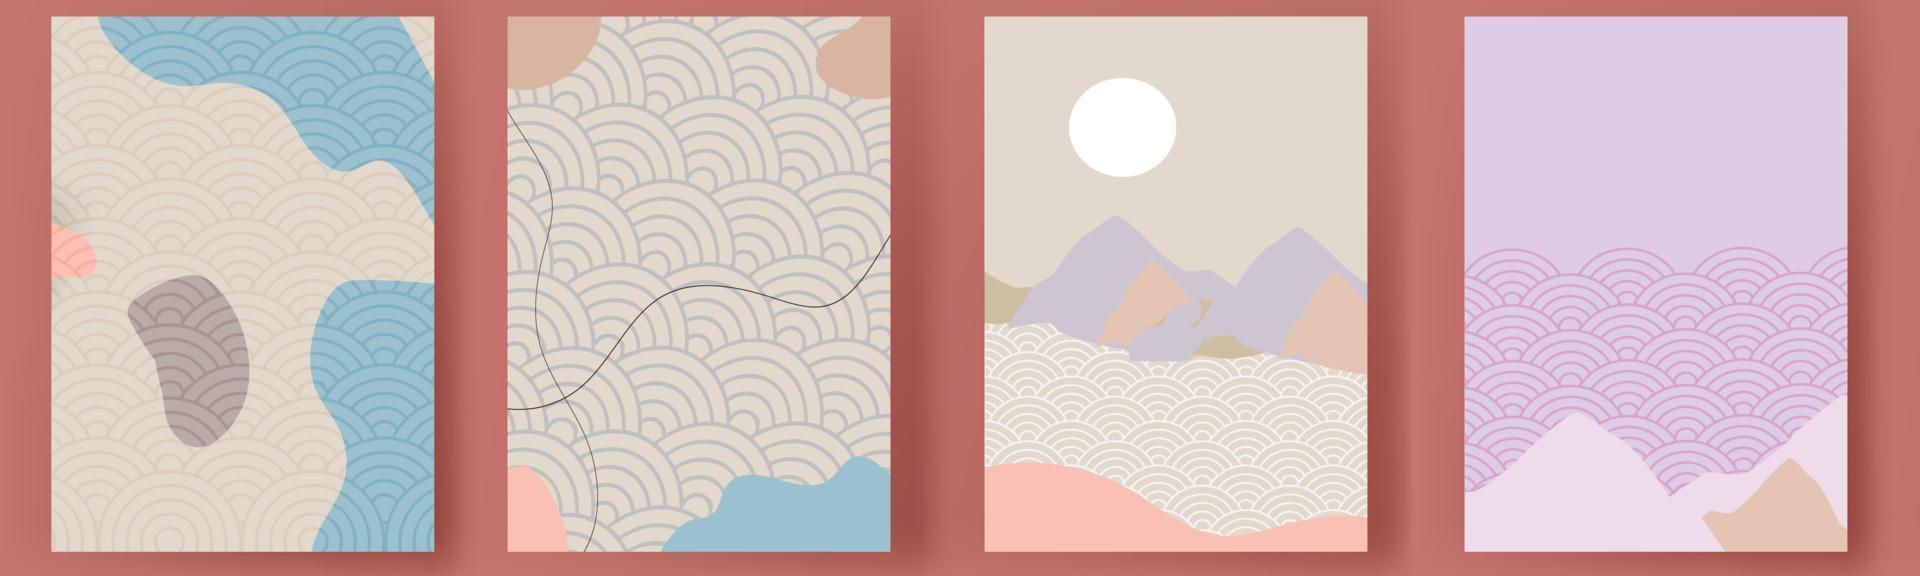 japan modern art paper graphic wallpaper abstract arts vector